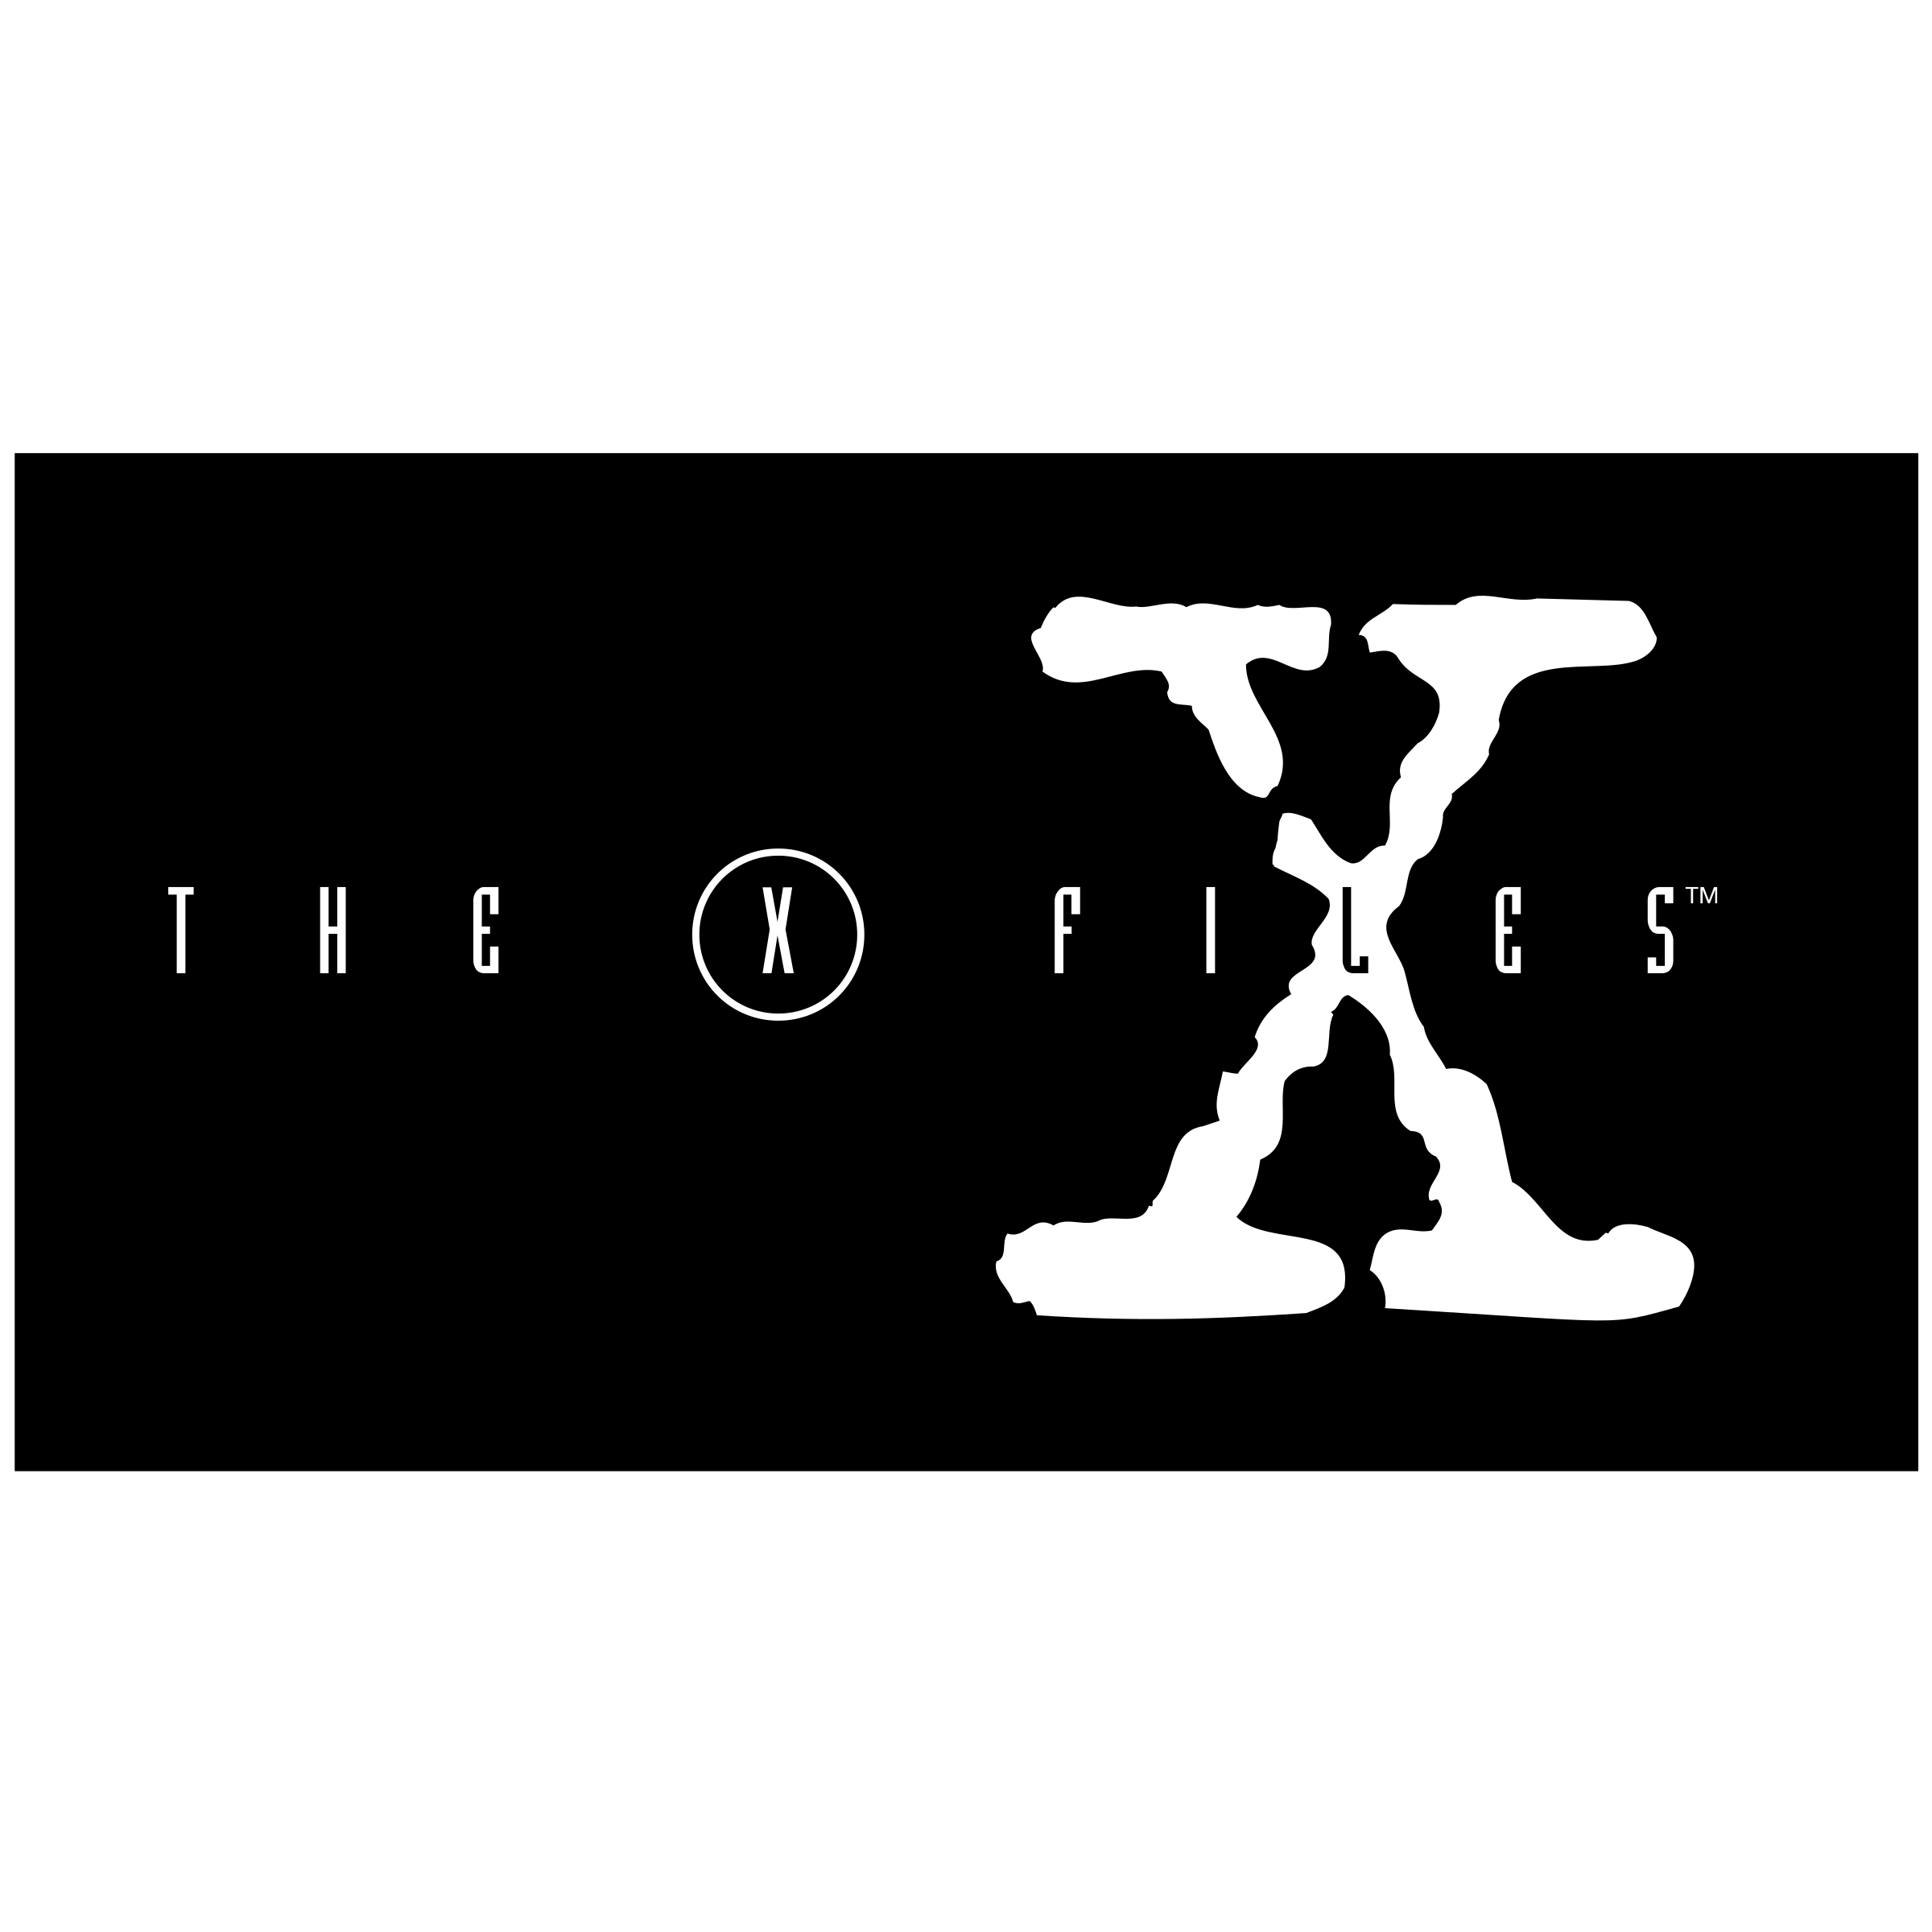 X-Files Logo - X Files Logo PNG Transparent & SVG Vector